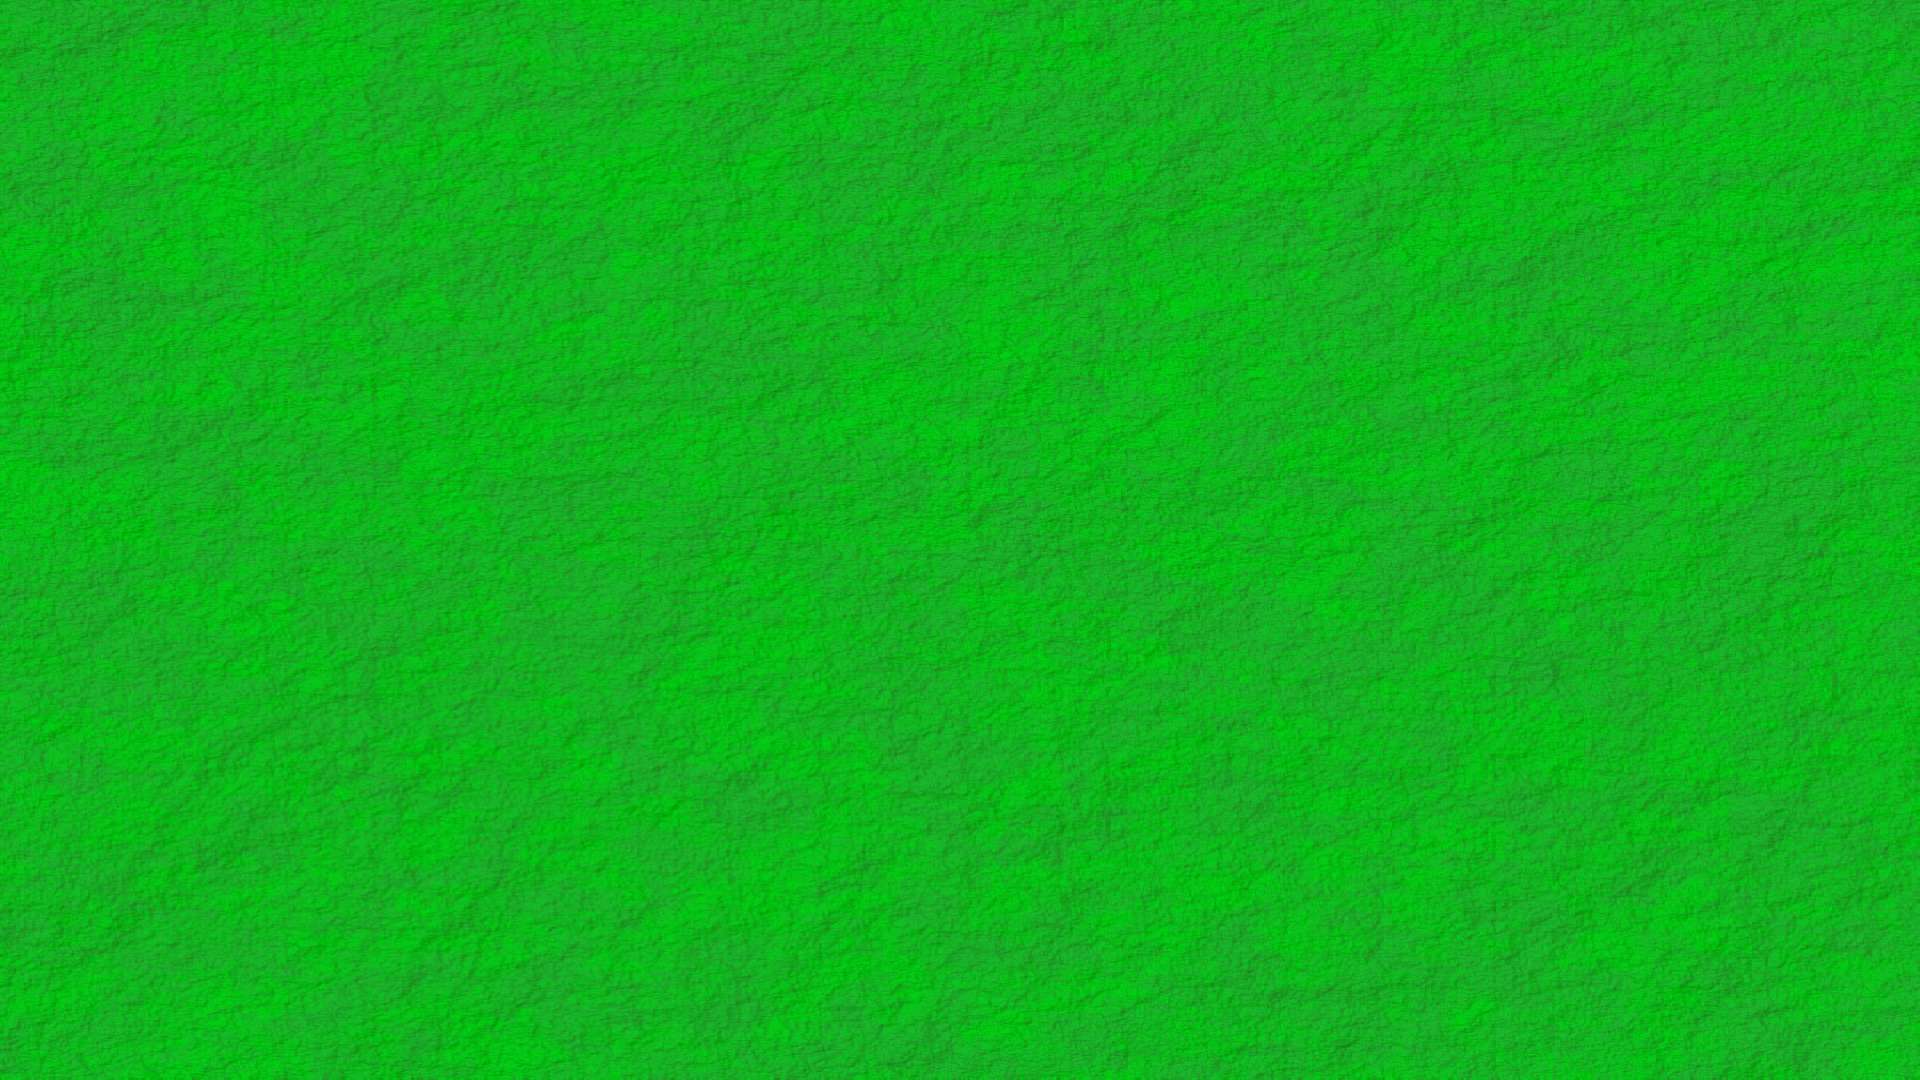 Large Green Background Image